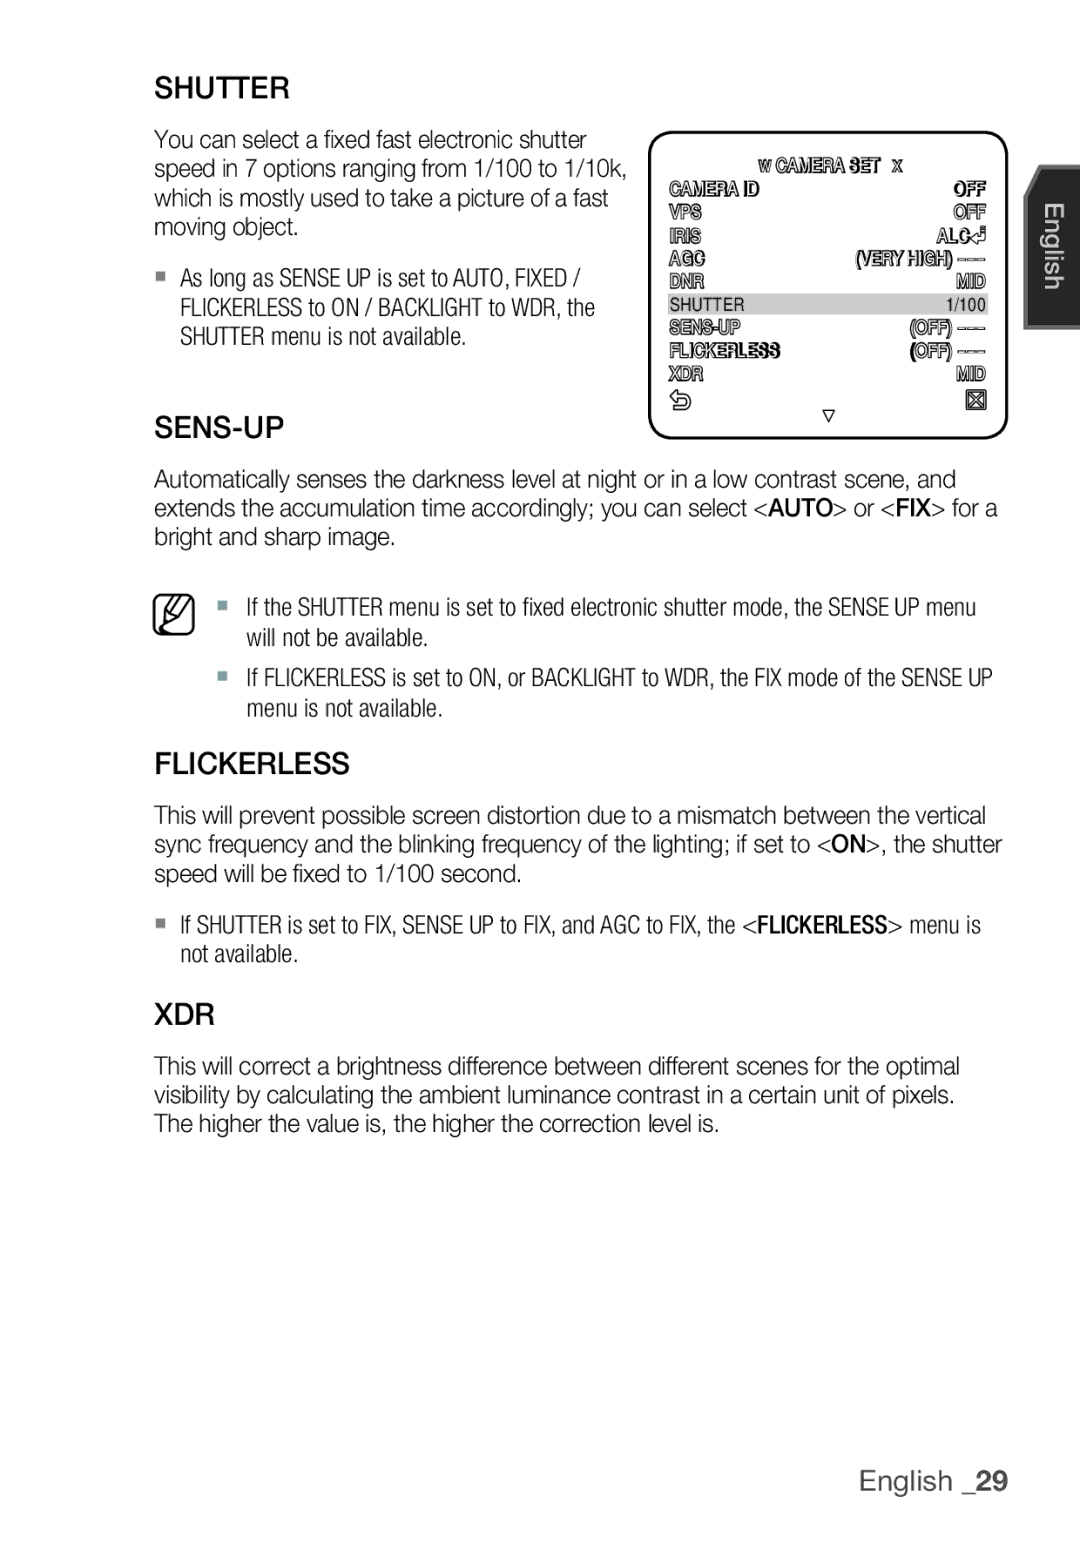 Samsung SCC-C7455P manual Shutter, Sens-Up, Flickerless, Xdr 